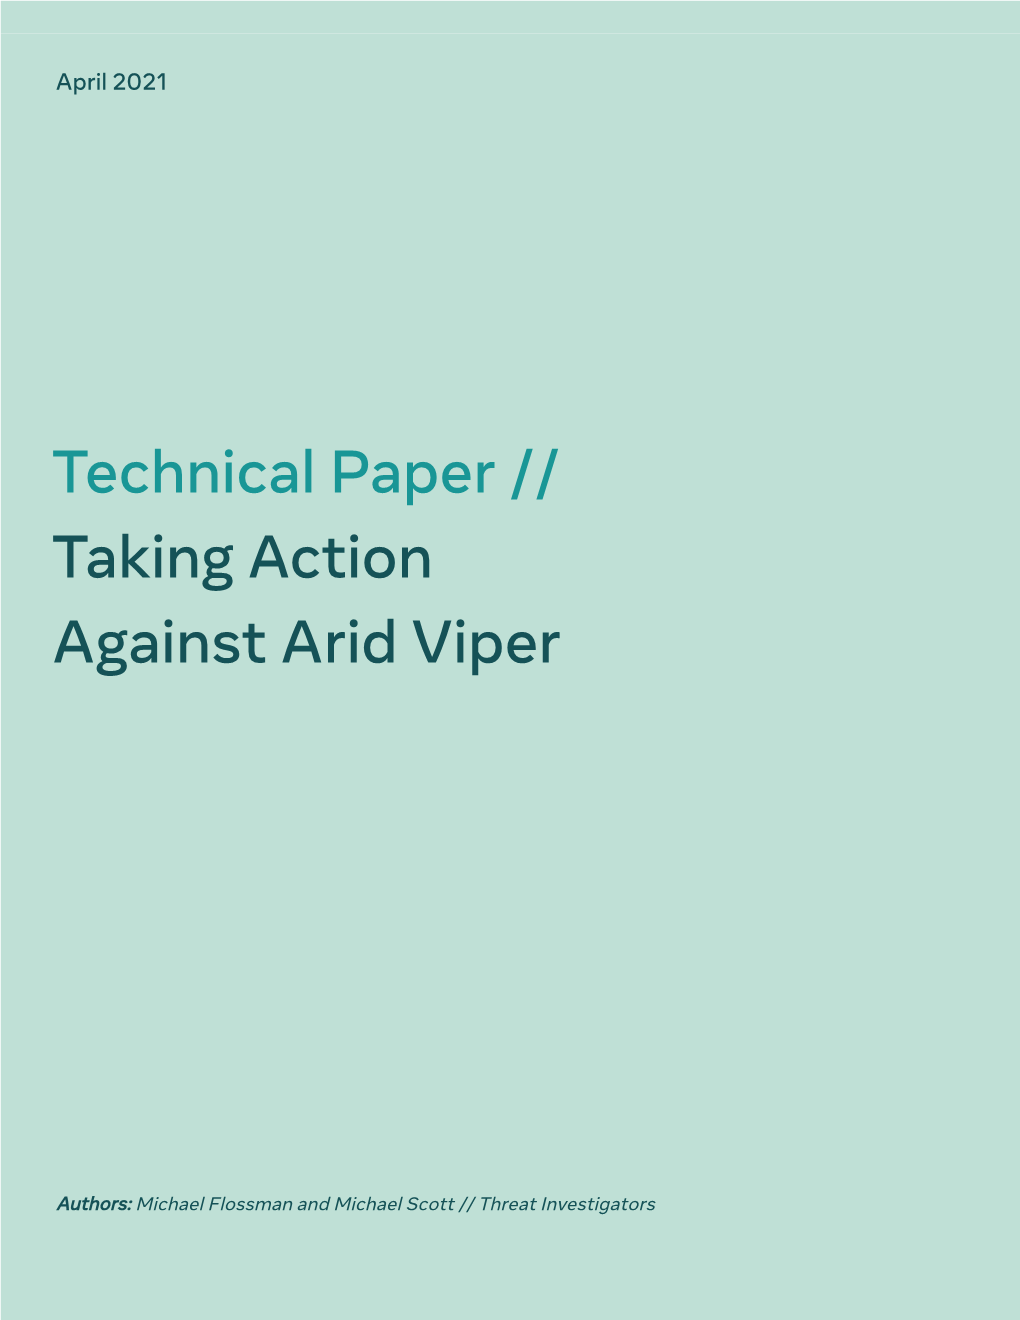 Technical Threat Report: Arid Viper 2